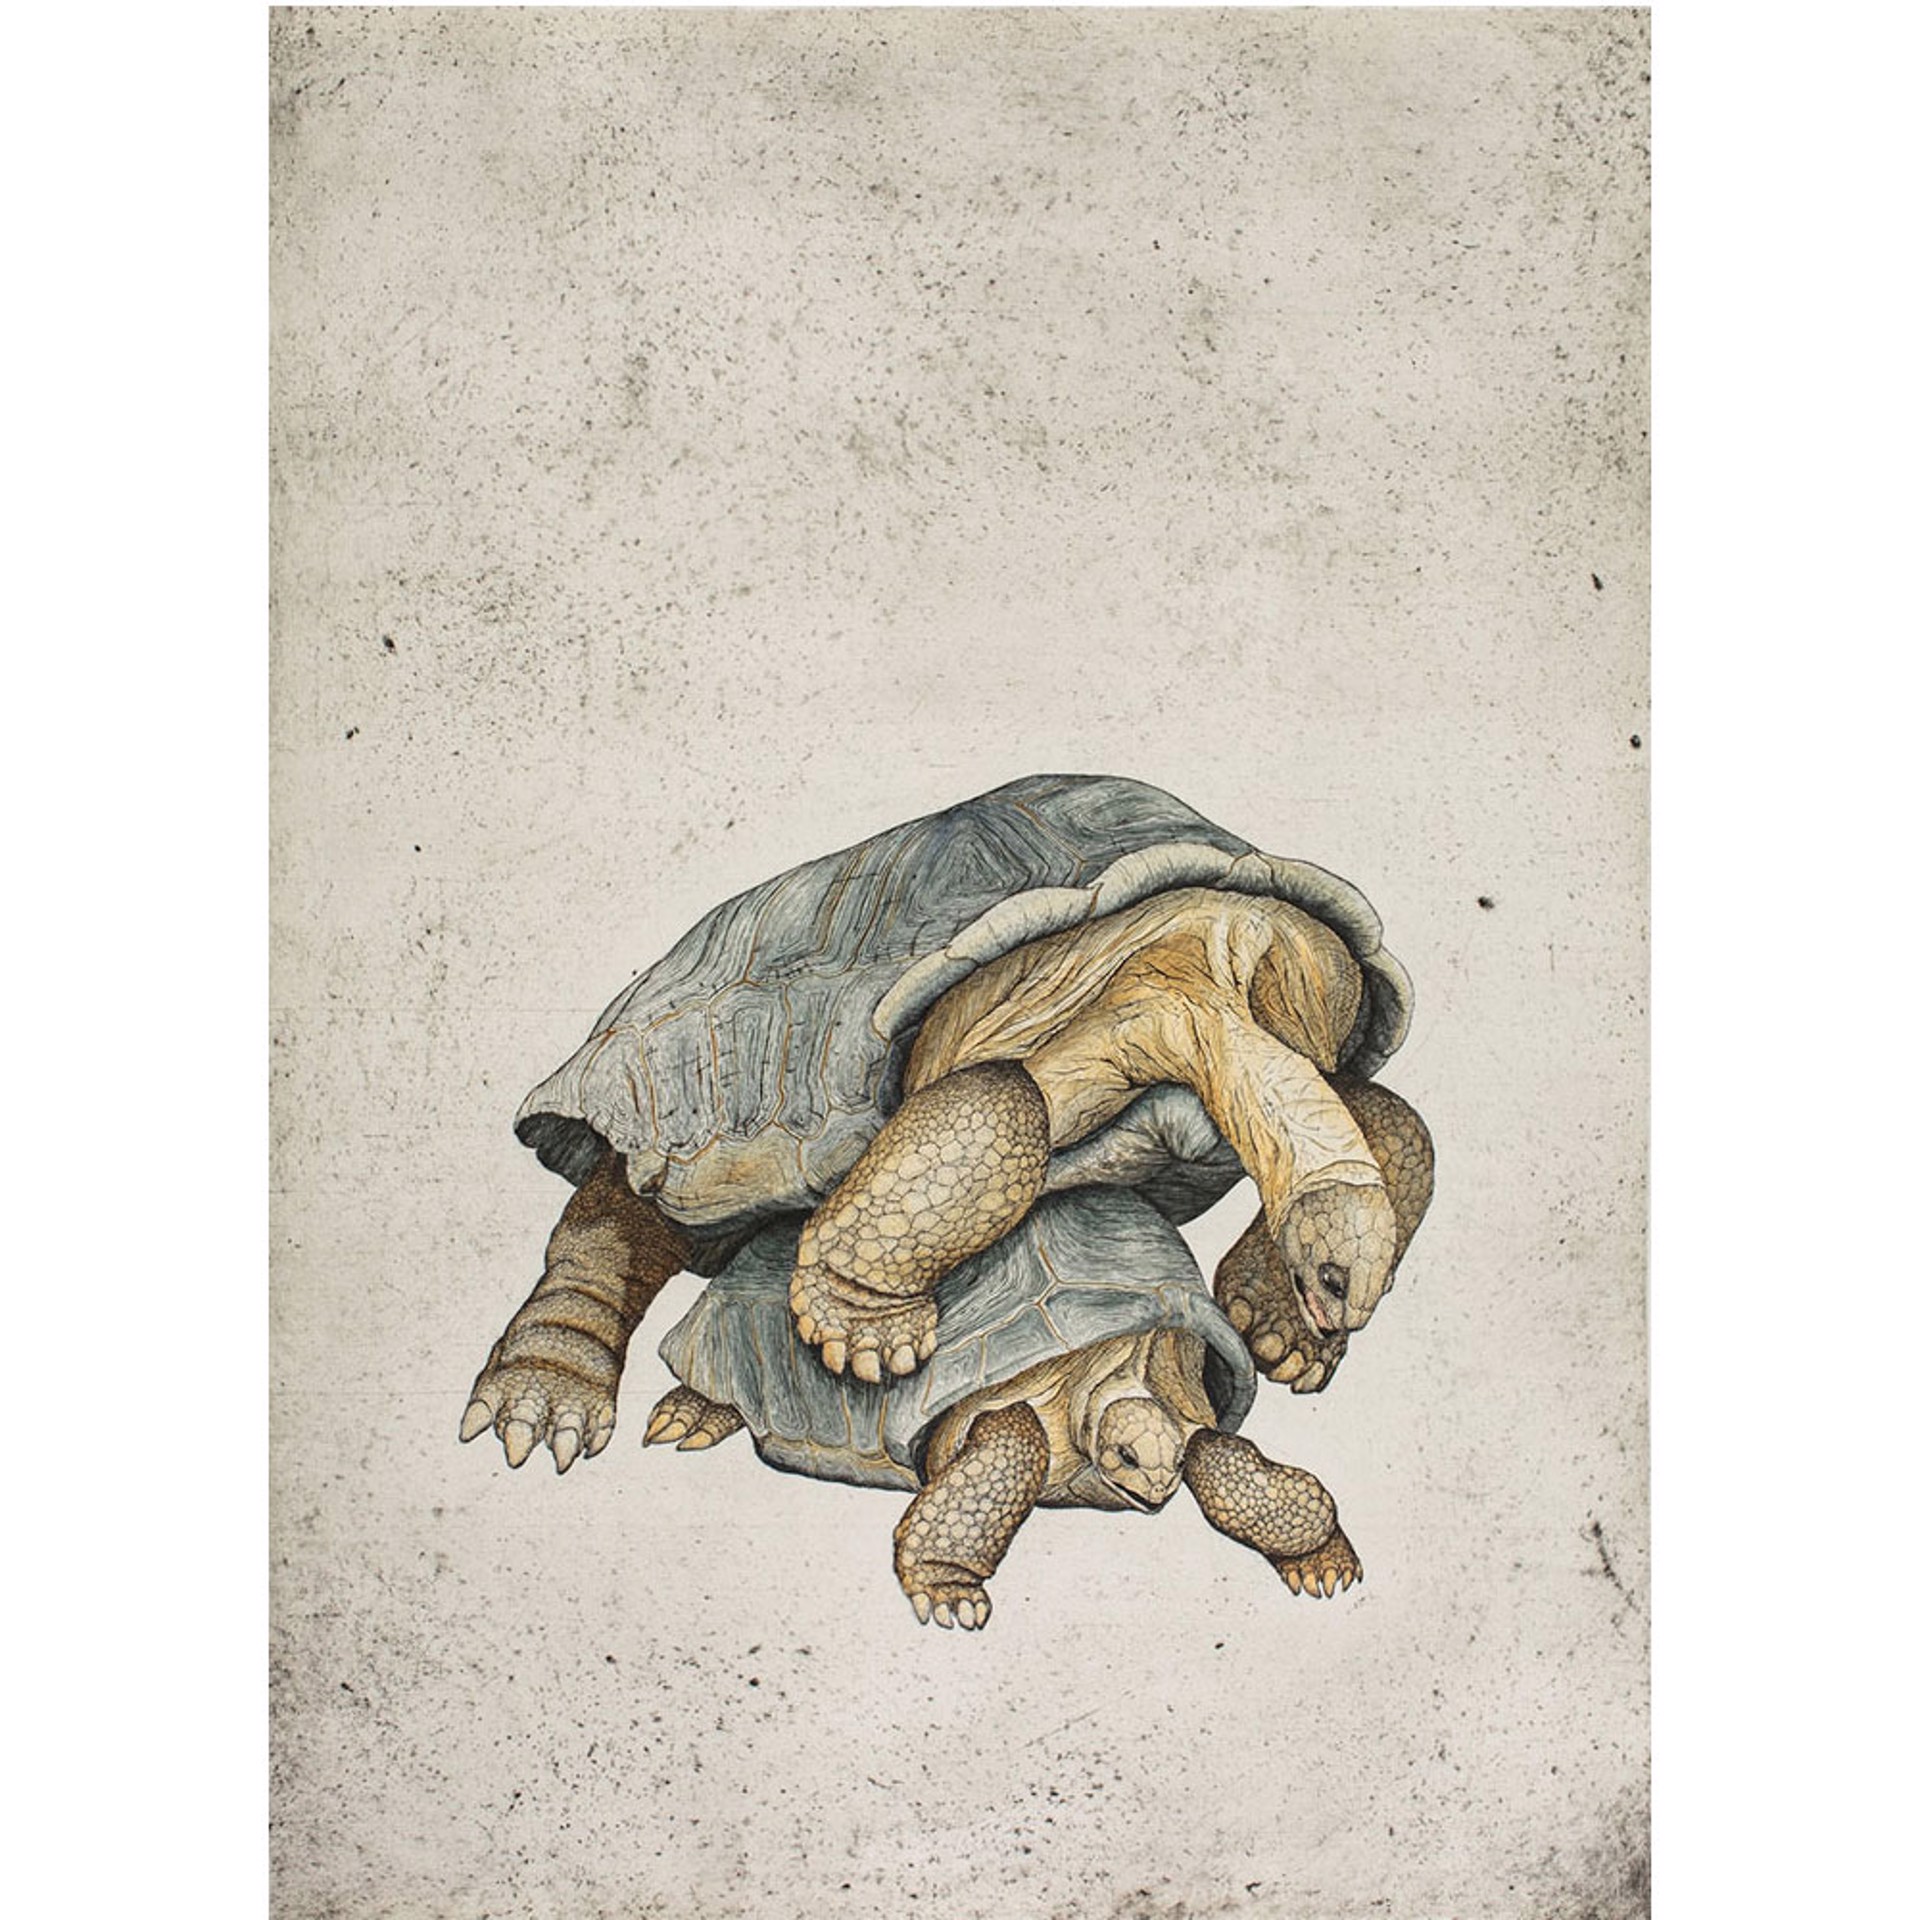 Aldabrachelys Gigantean by Briony Morrow-Cribbs